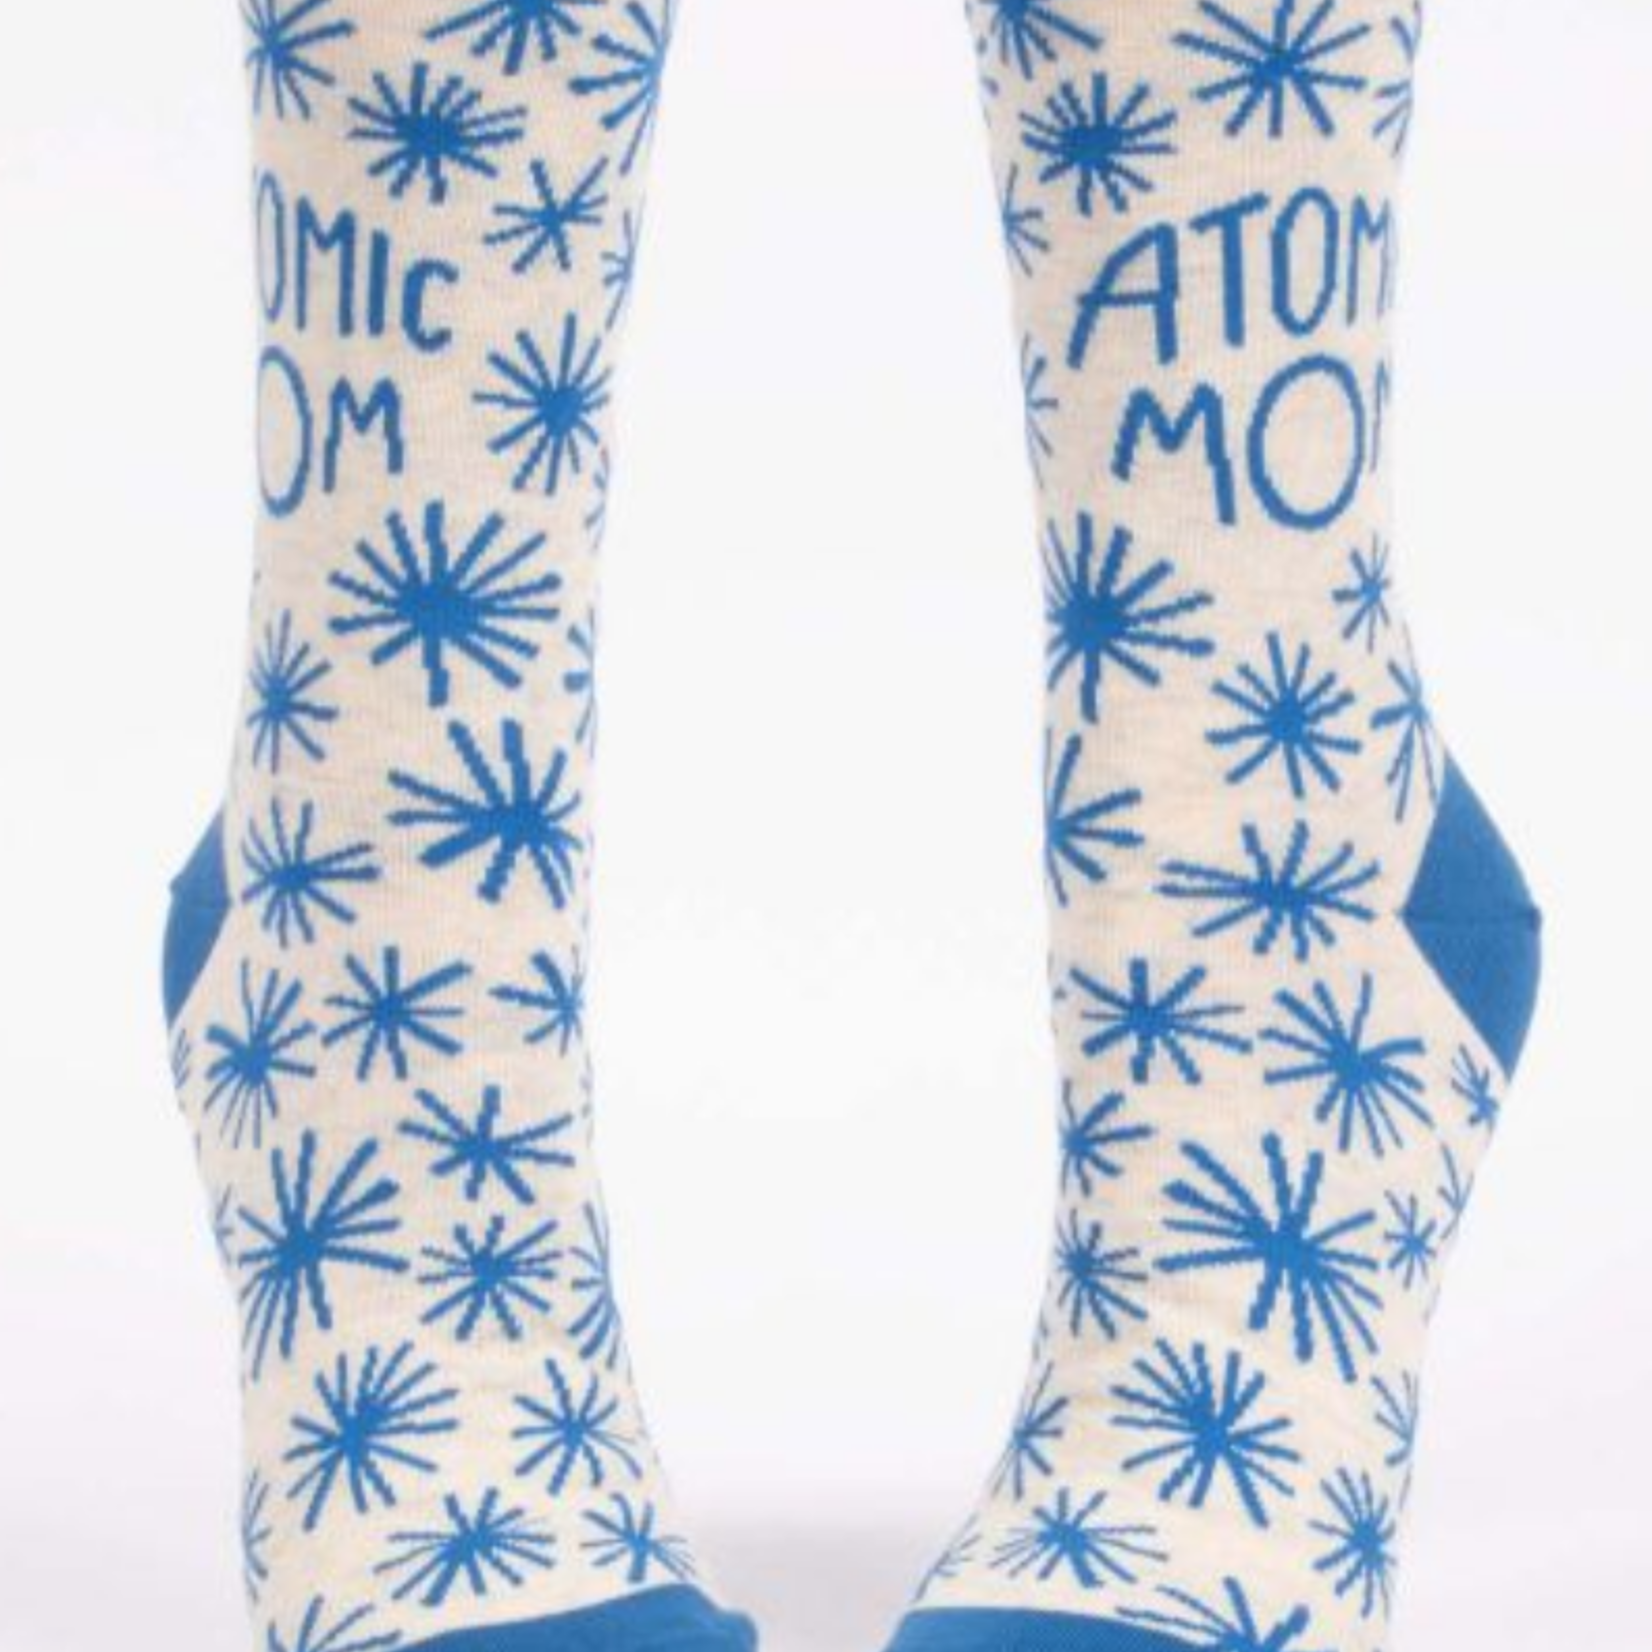 Blue Q Blue Q - Crew Socks - Atomic Mom